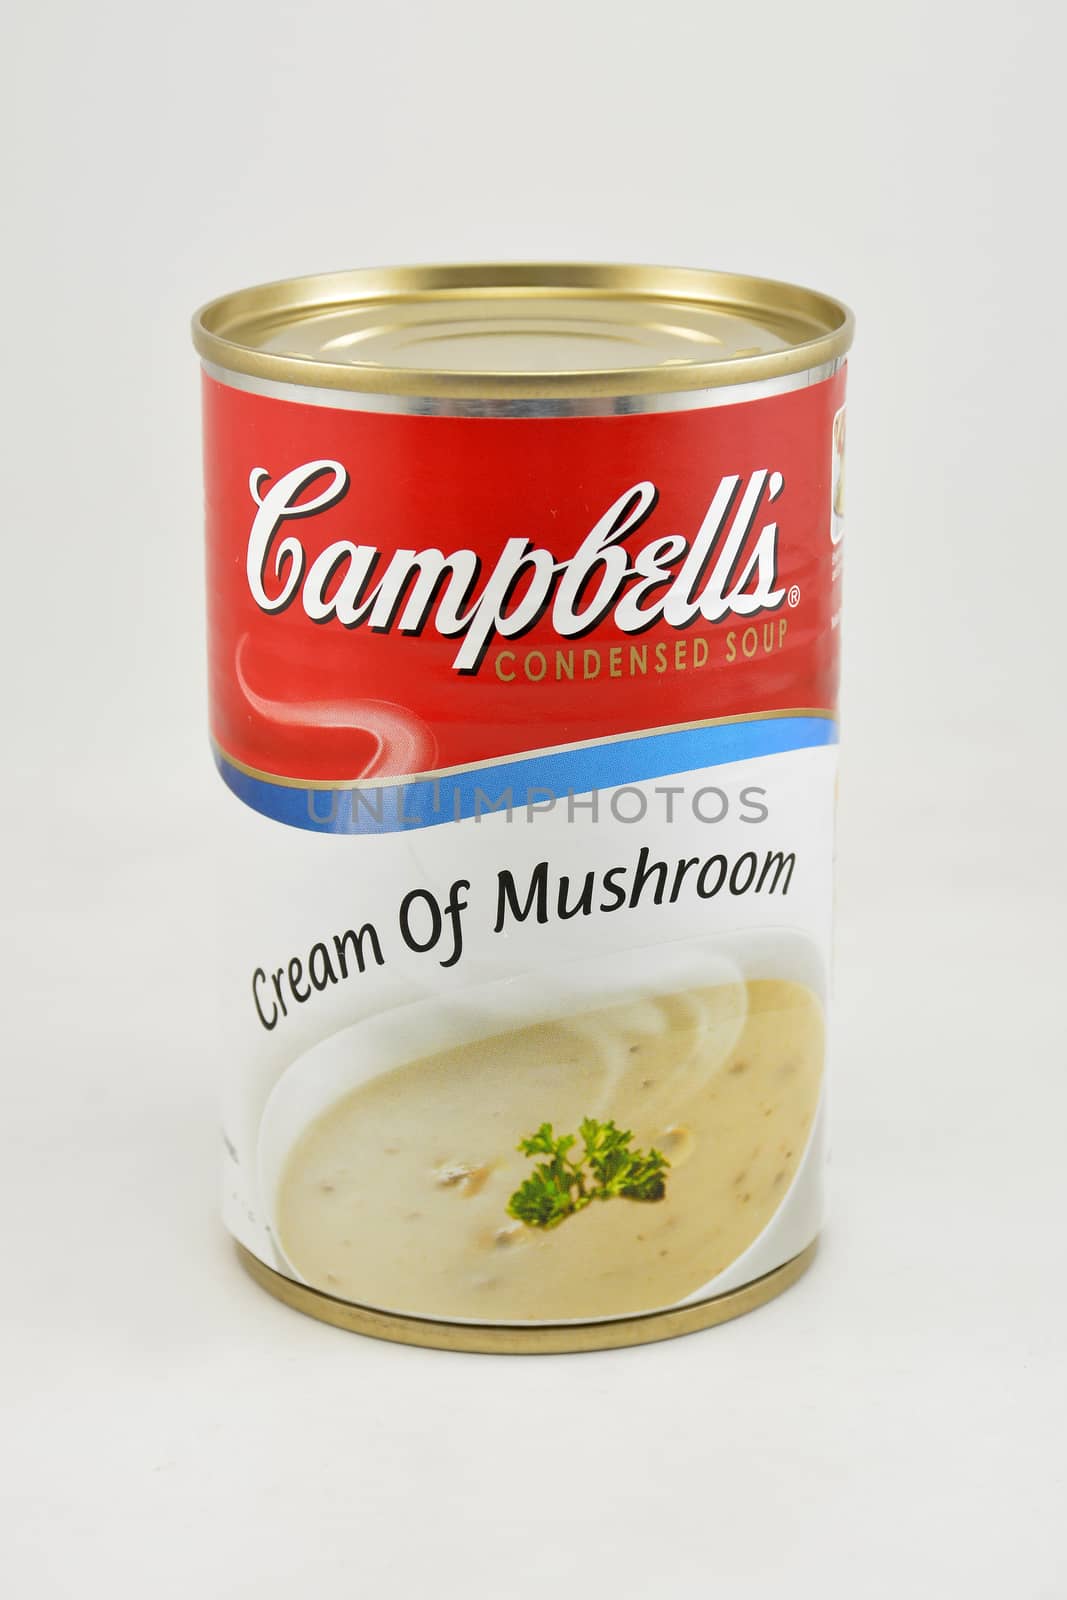 MANILA, PH - SEPT 10 - Campbells cream of mushroom can on September 10, 2020 in Manila, Philippines.